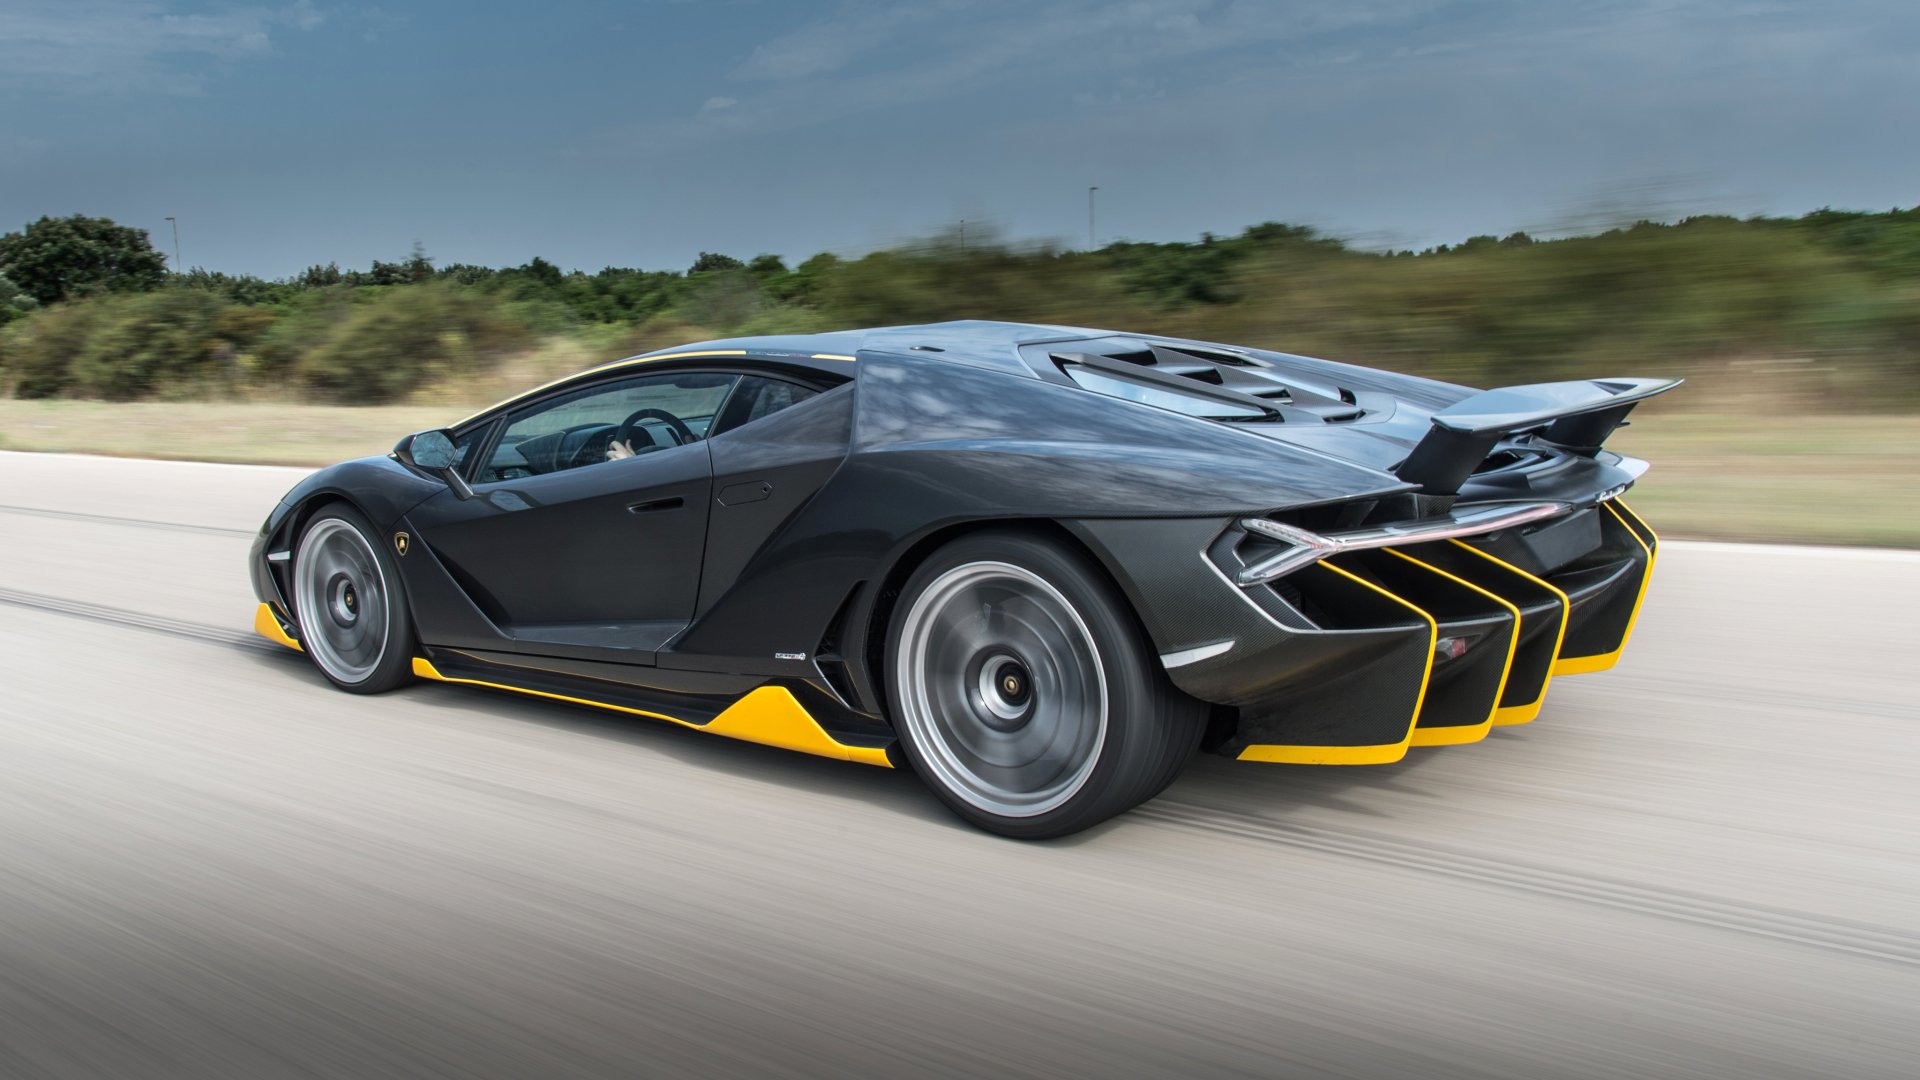 Lamborghini Centenario 4k Ultra Hd Wallpaper Background Image 4096x2304